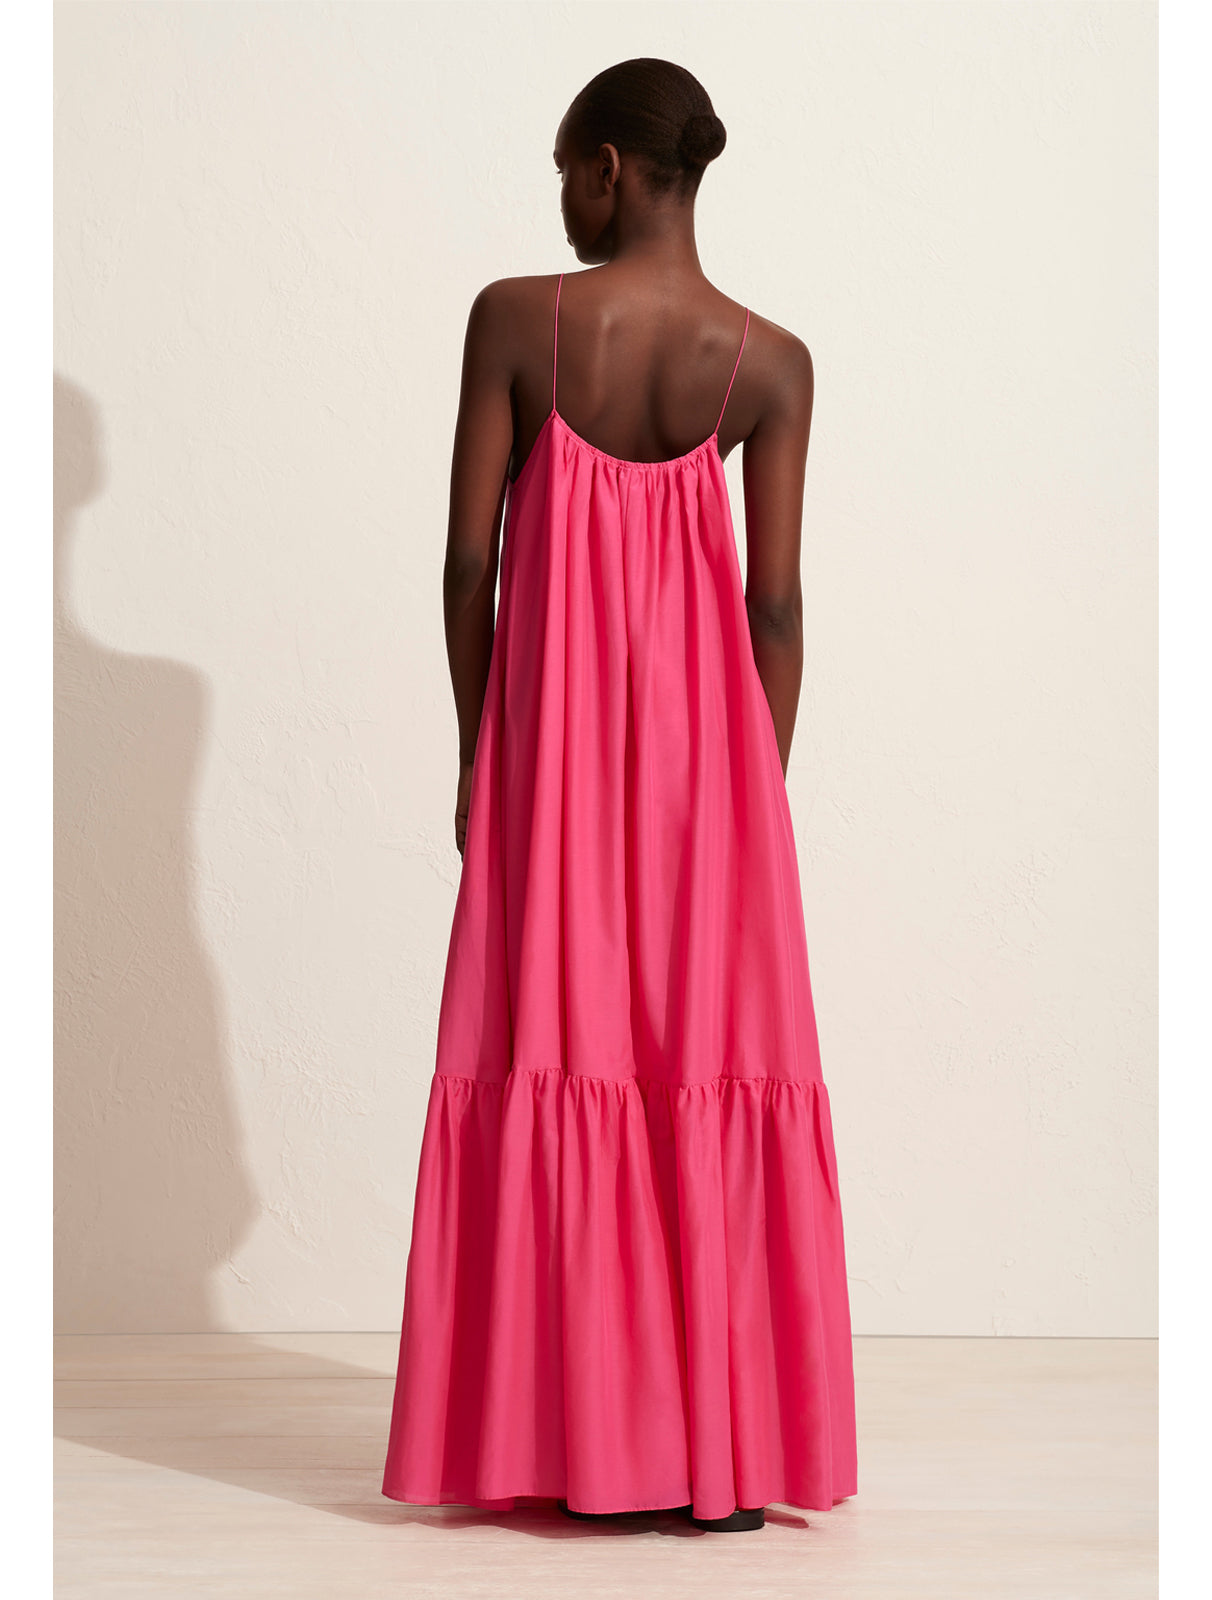 Matteau sherbert pink single layer gathered summer dress on model, back view